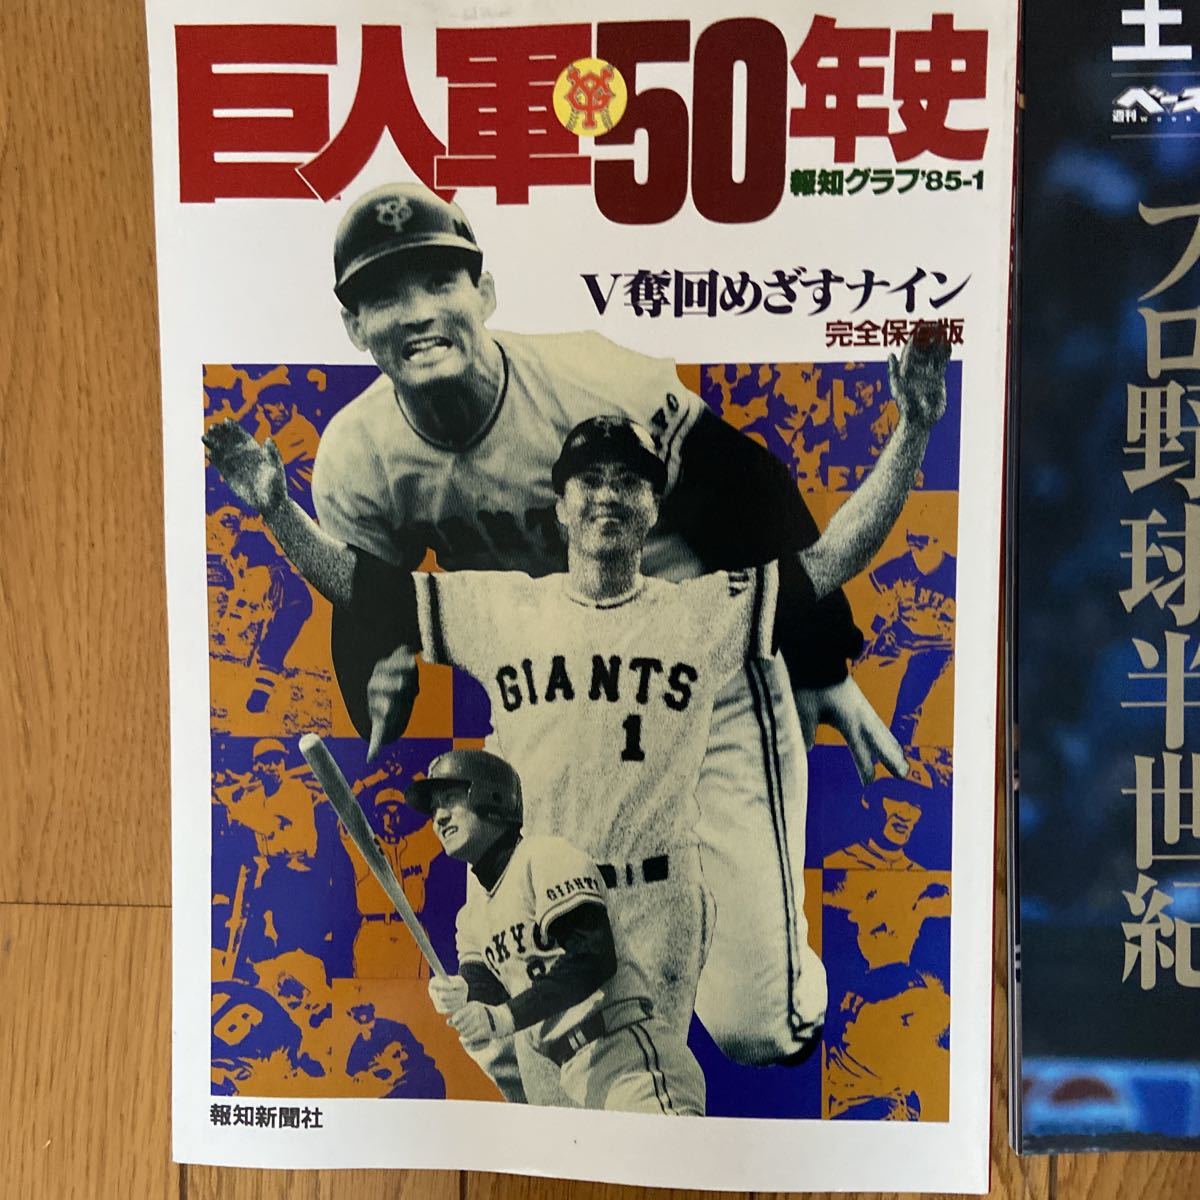 .. newspaper company weekly Baseball . person army 50 year history ja Ian tsu60 year Nagashima Shigeo 365 day 92~93..... memory number Baseball magazine 2008